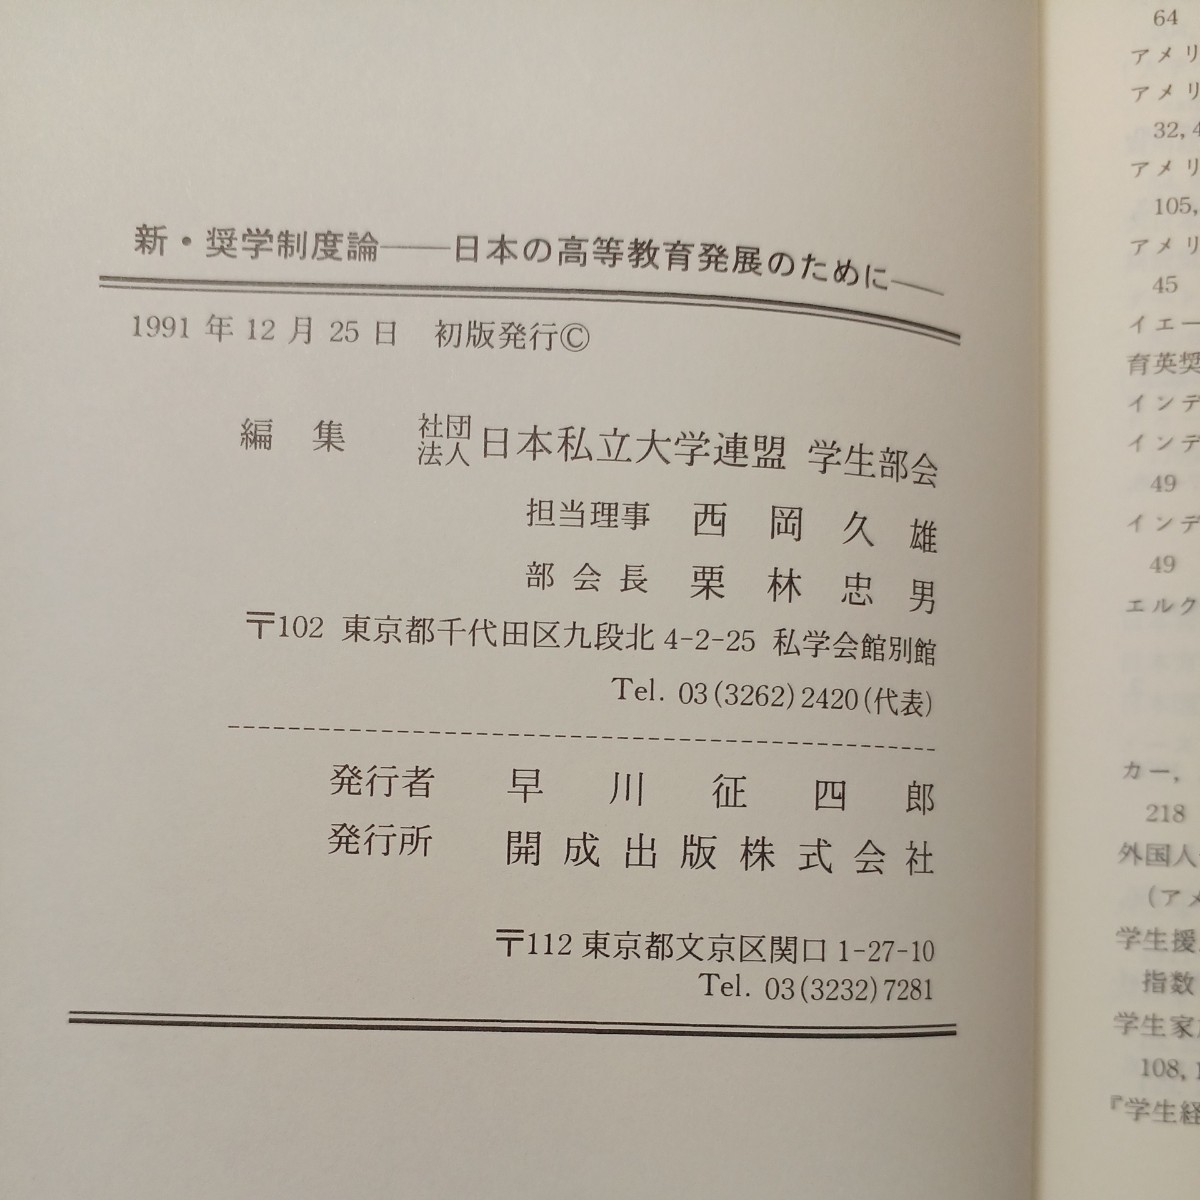 zaa-503♪新・奨学制度論　日本の高等教育発展のために　日本私立大学連盟学生部会 ( 著) 開成出版 (1991/1/1)